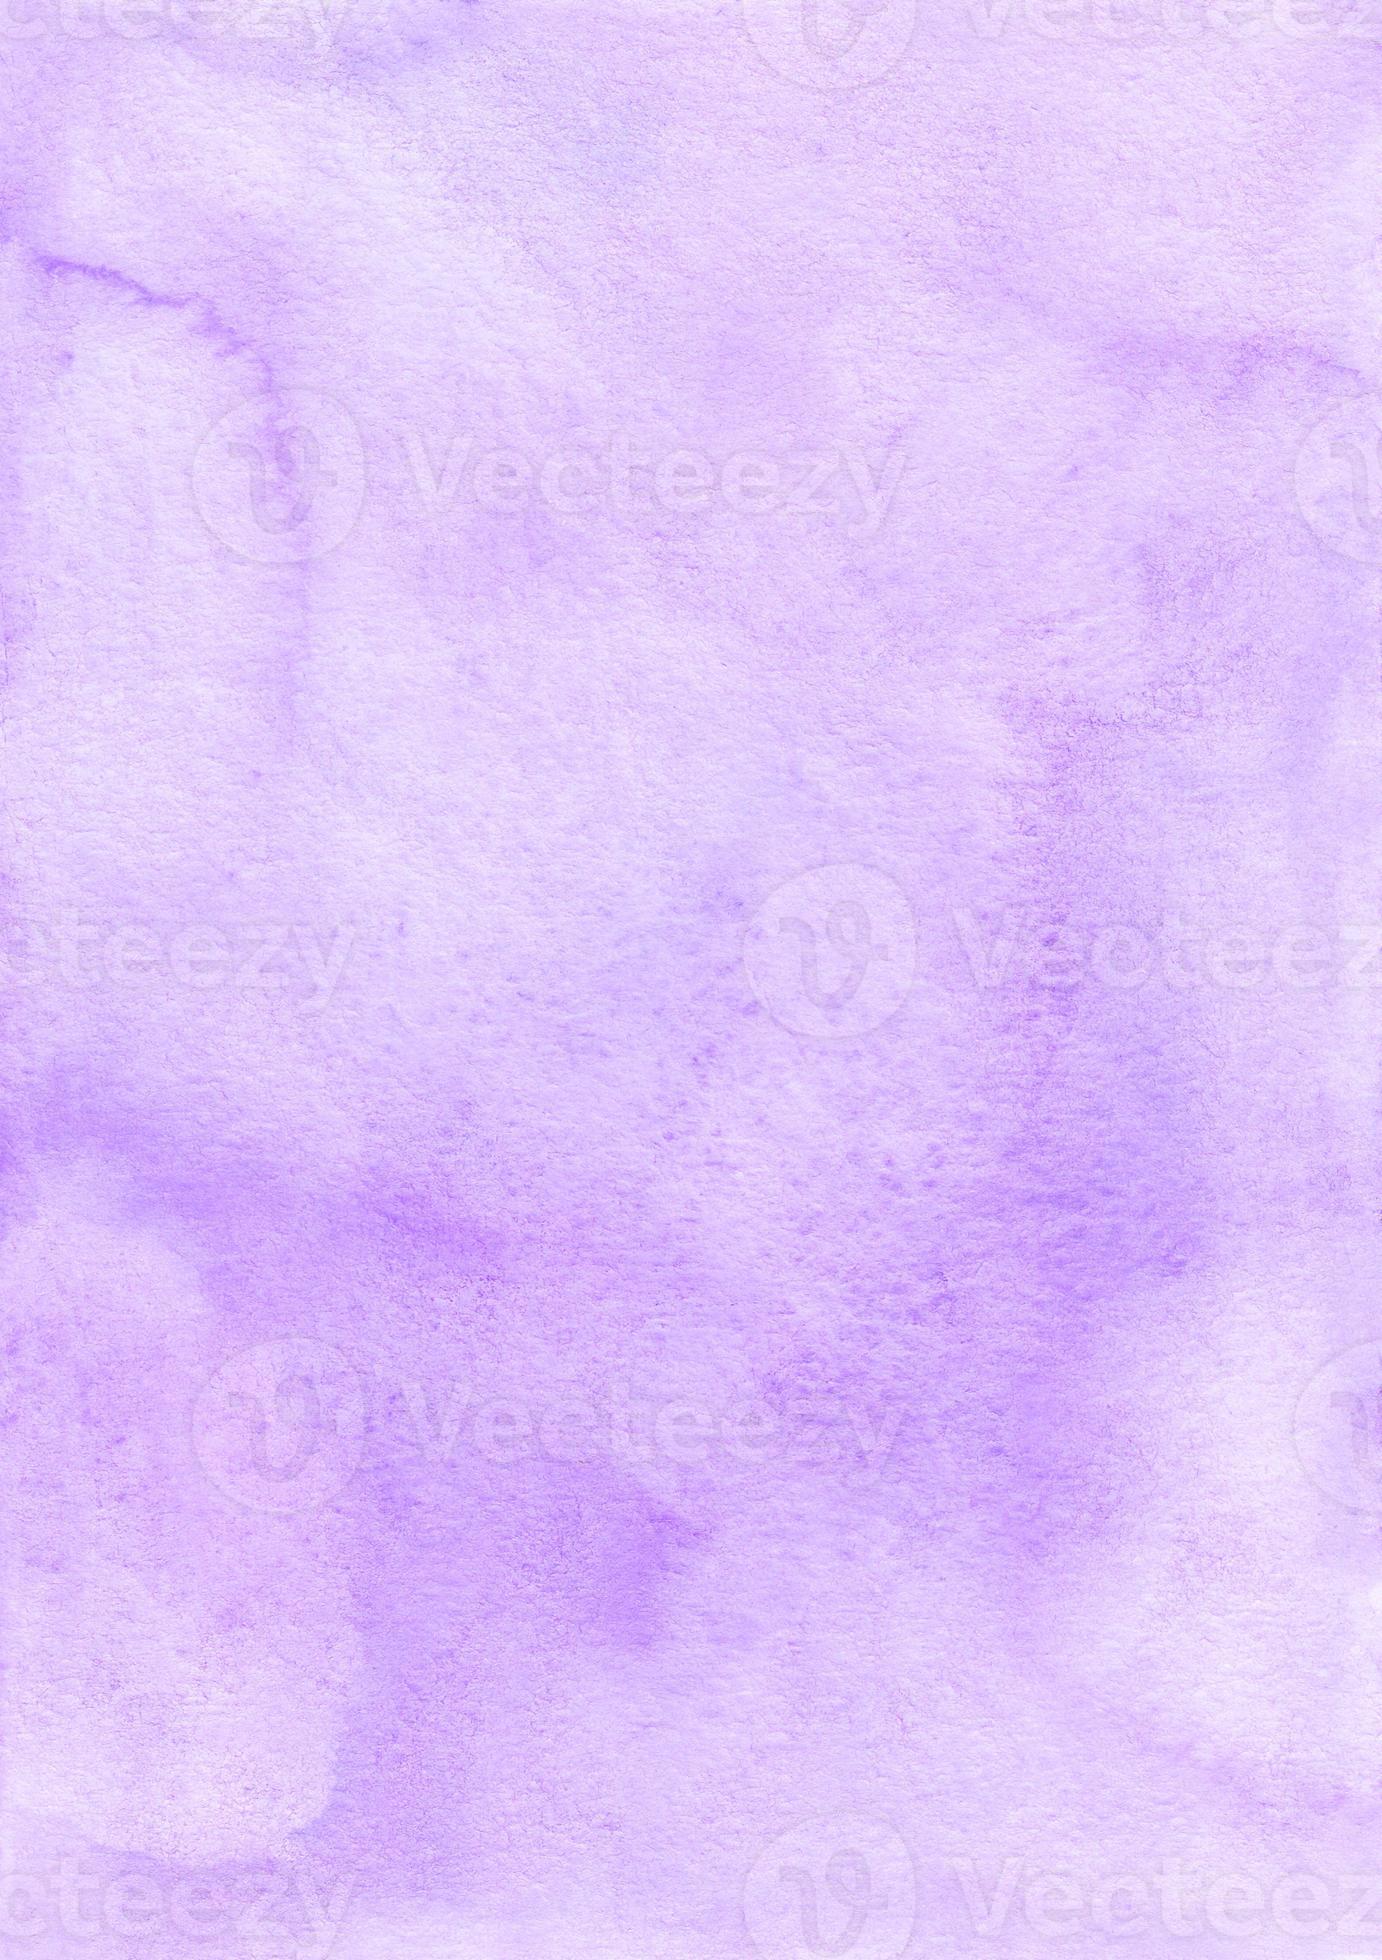 Lavender Wallpaper Images  Free Download on Freepik